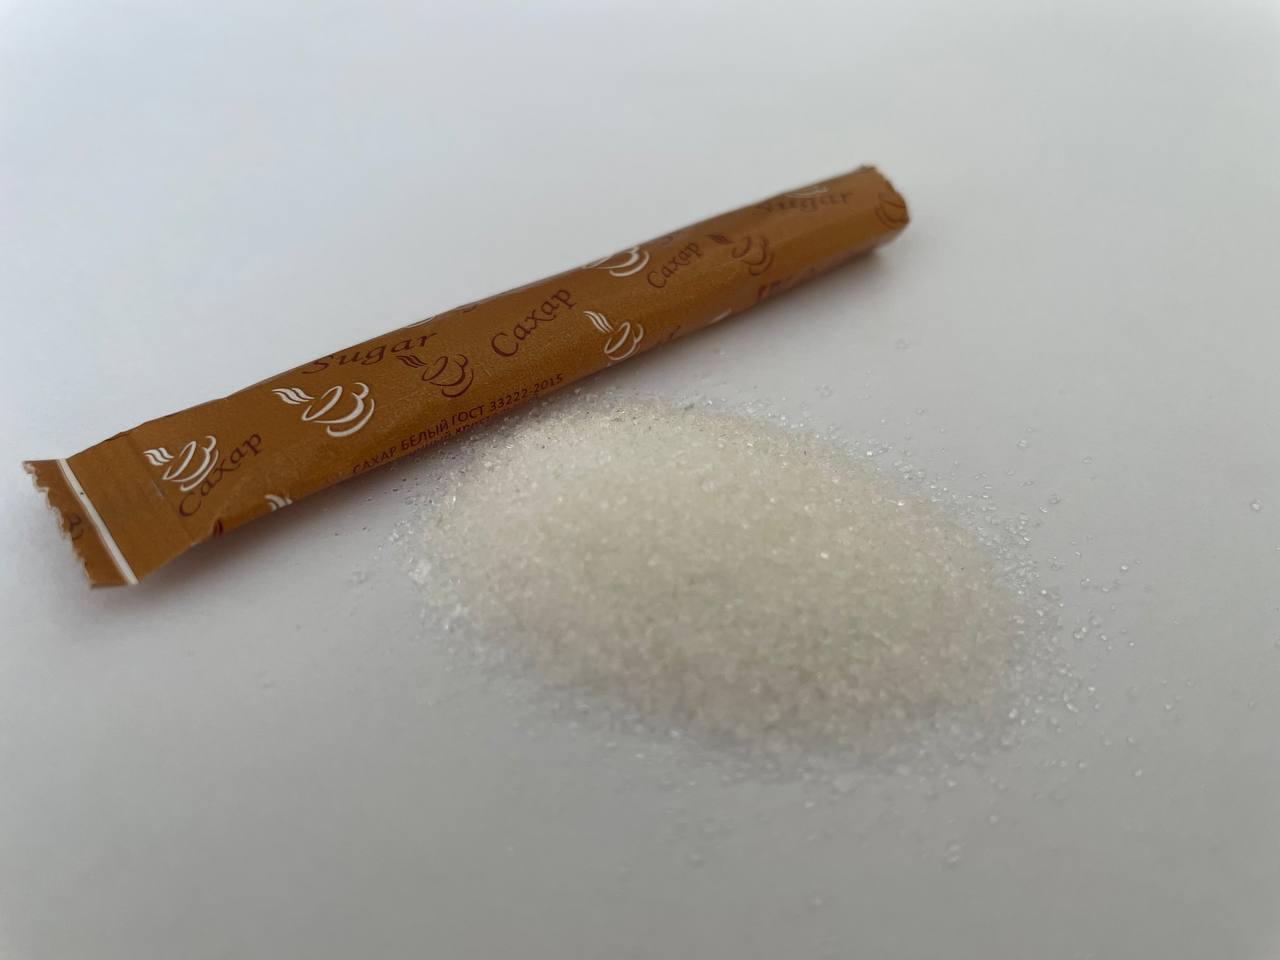 100 тонн в день: минсельхоз РТ назвал причину ажиотажного спроса на сахар